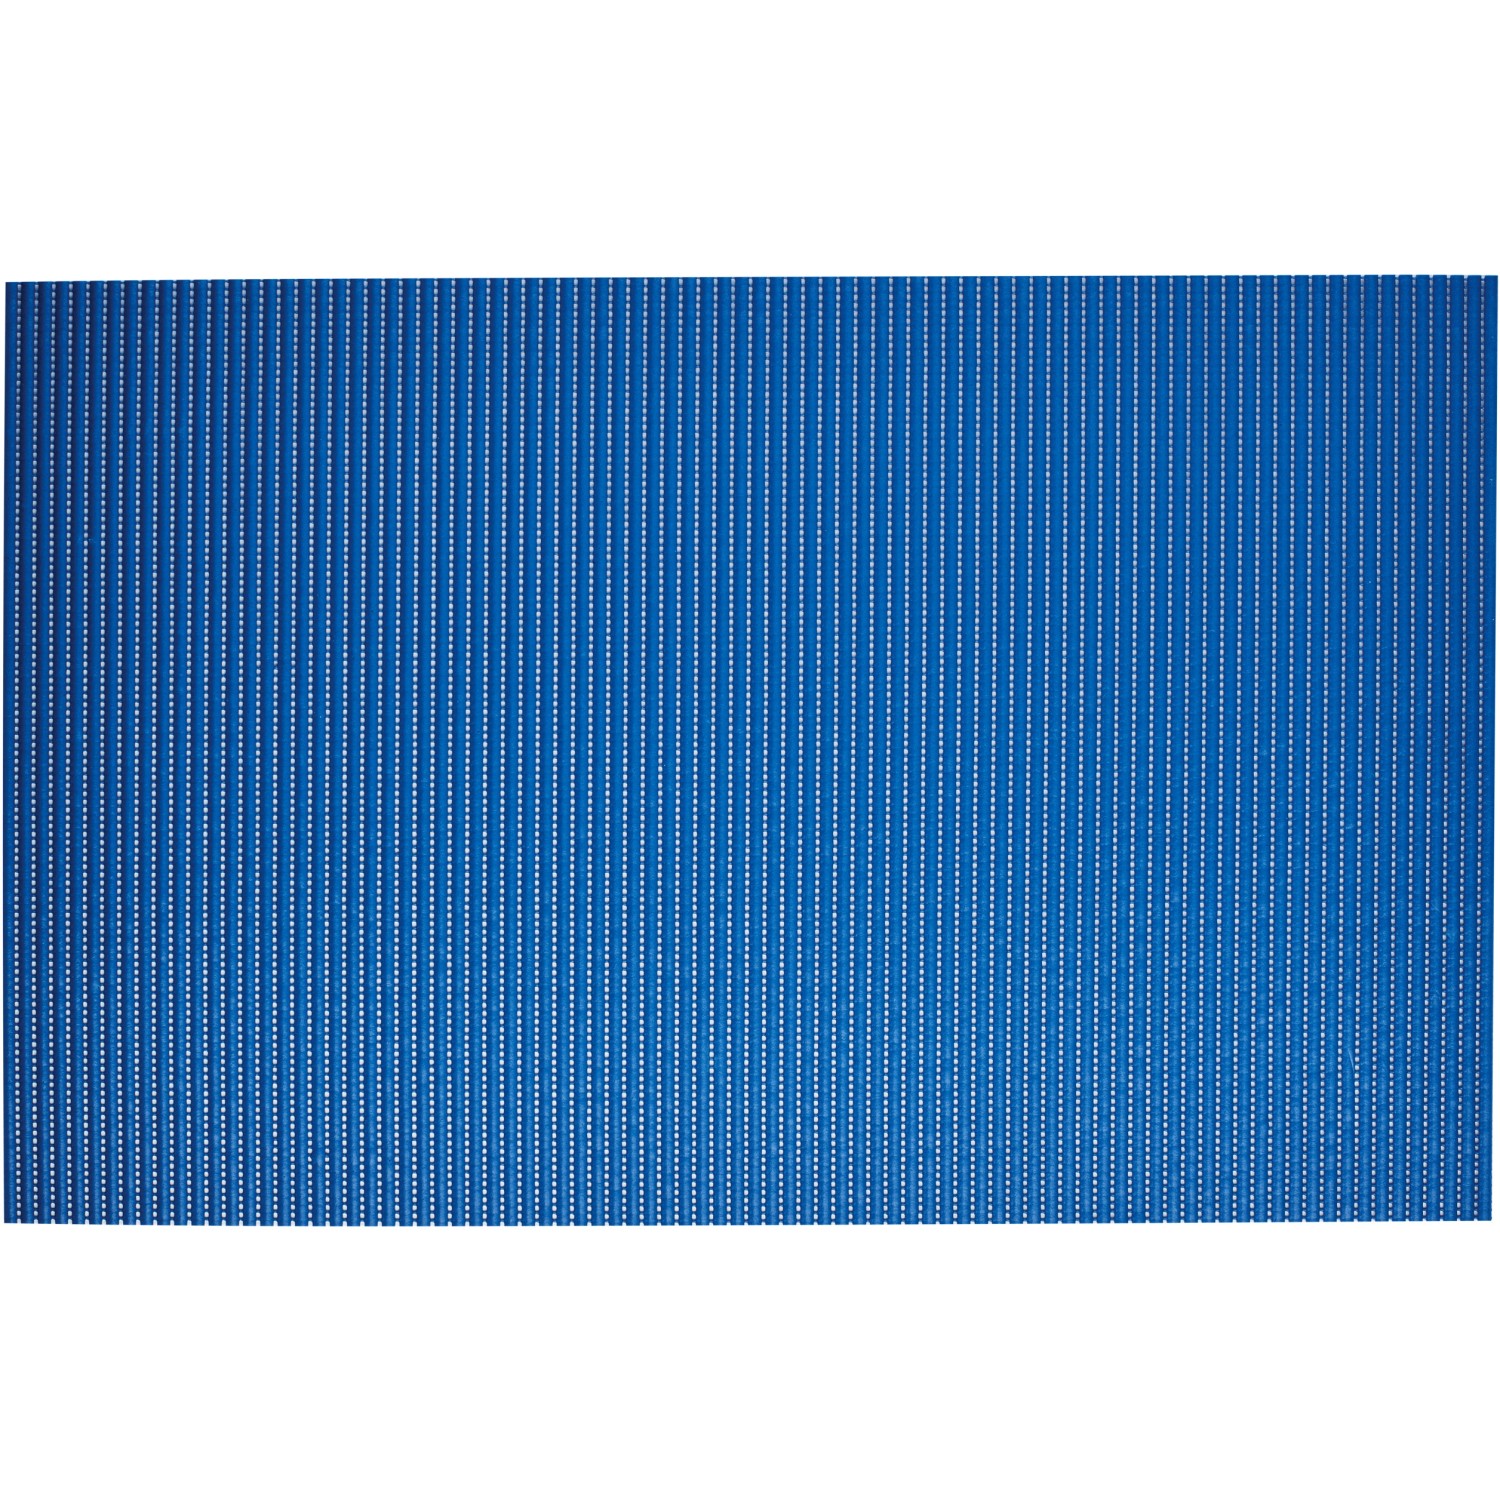 Ridder PVC-Weichschaum-Matte Standard Grau 65 cm breit Meterware